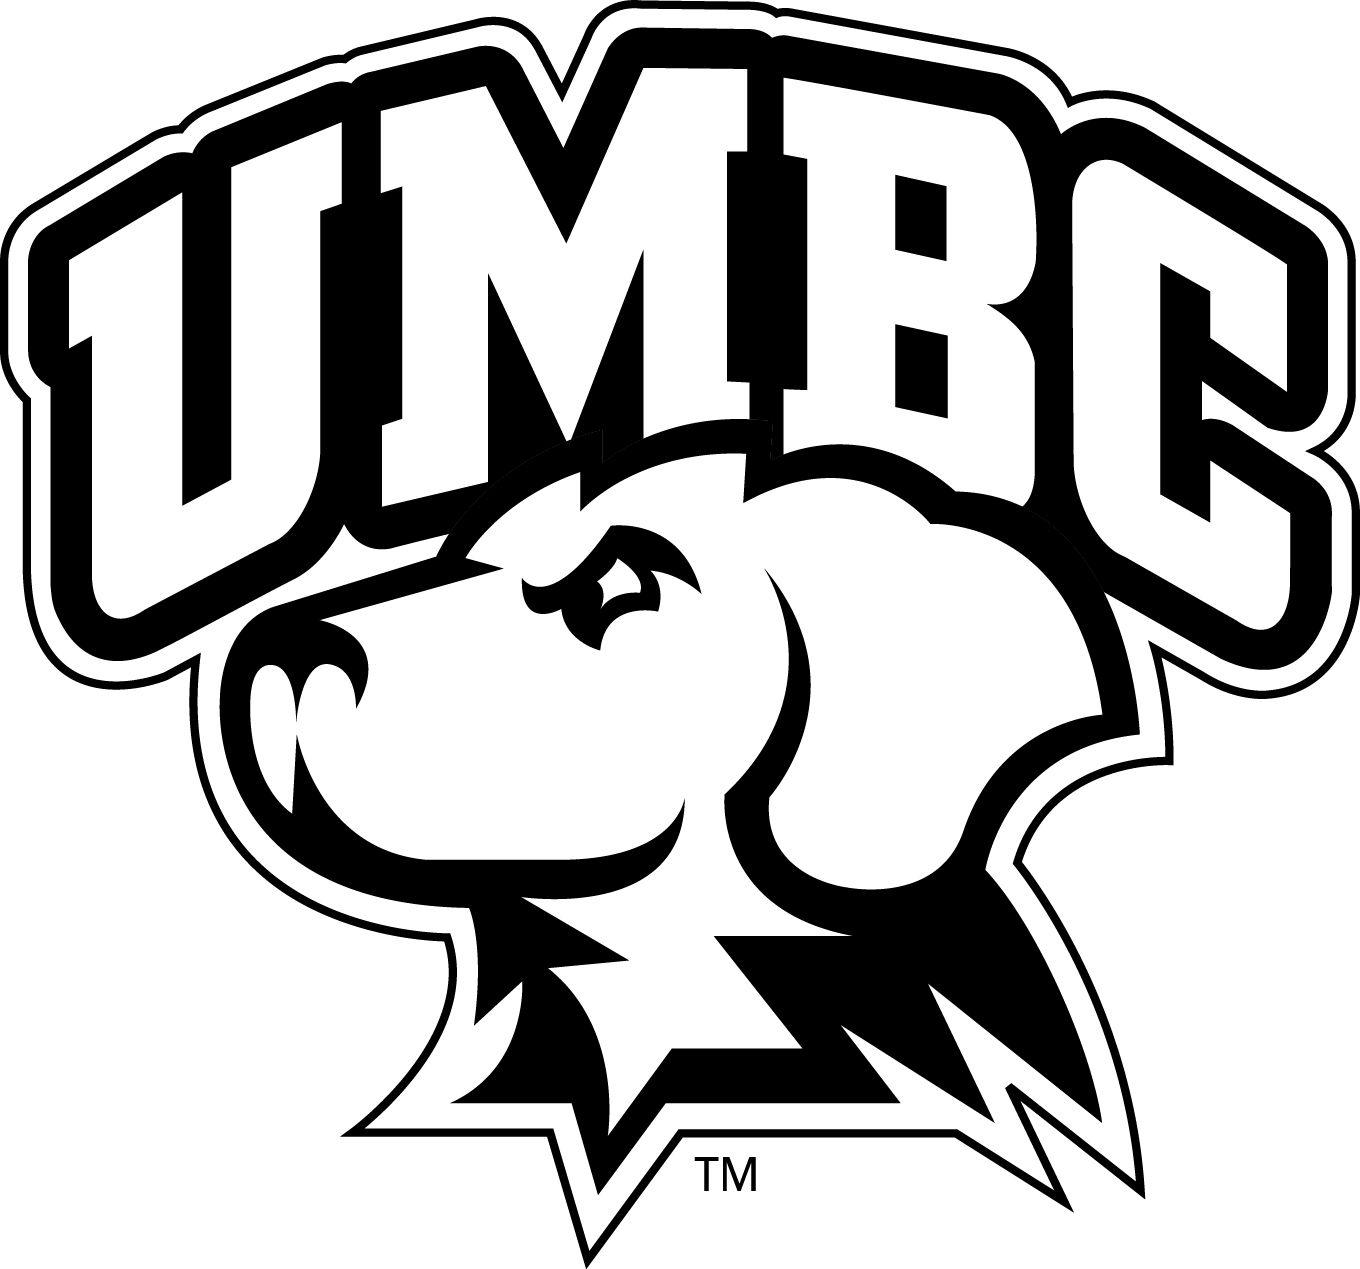 UMBC Logo - UMBC Logos - UMBC Brand and Style Guide - UMBC